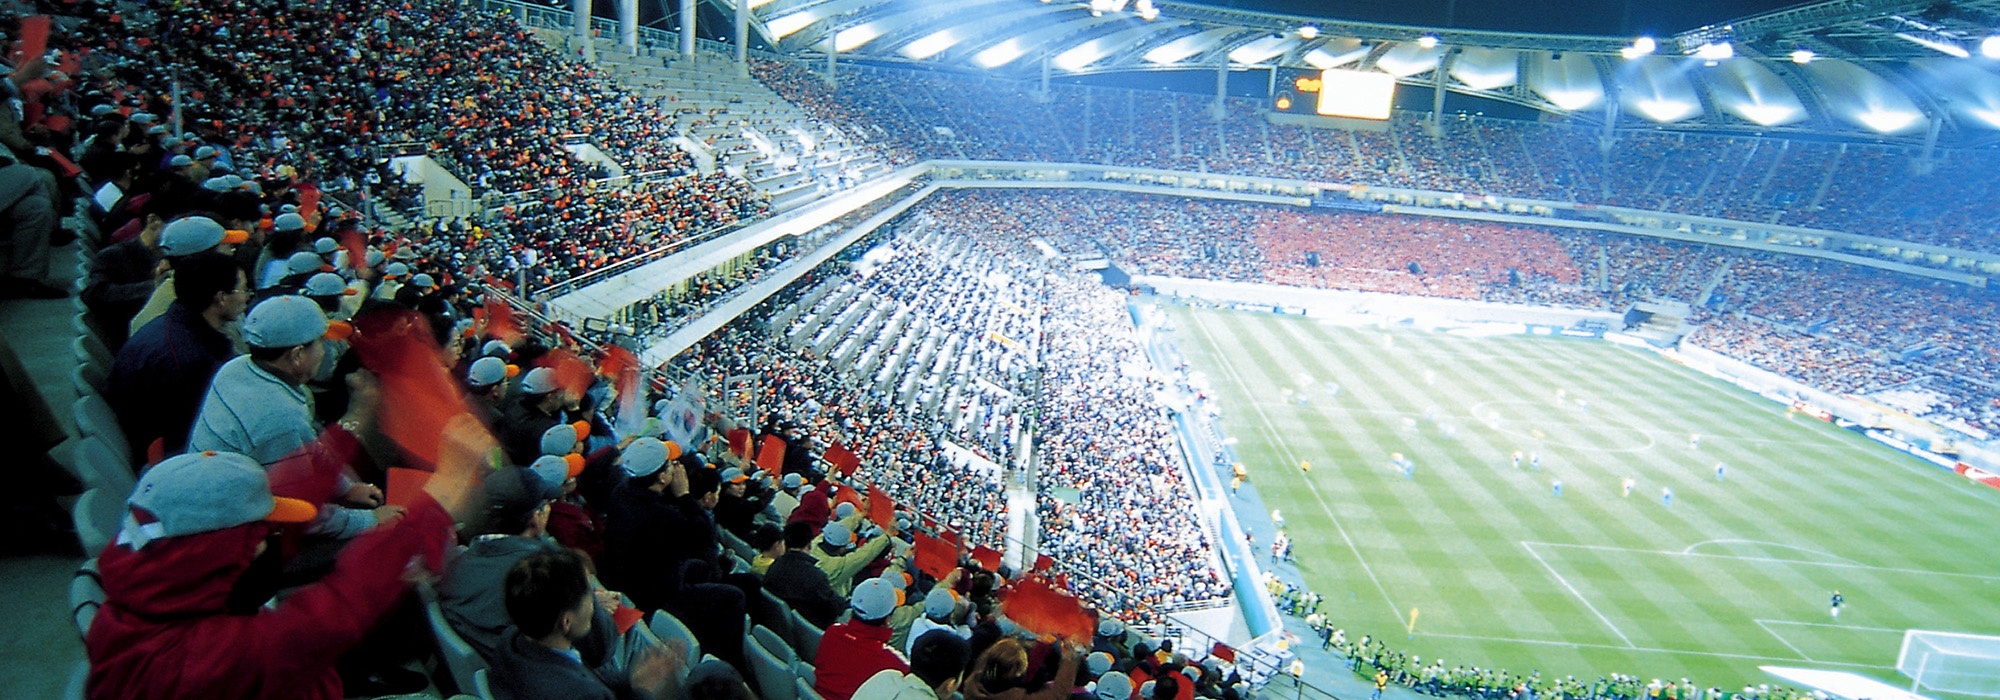 crowd-in-football-stadium